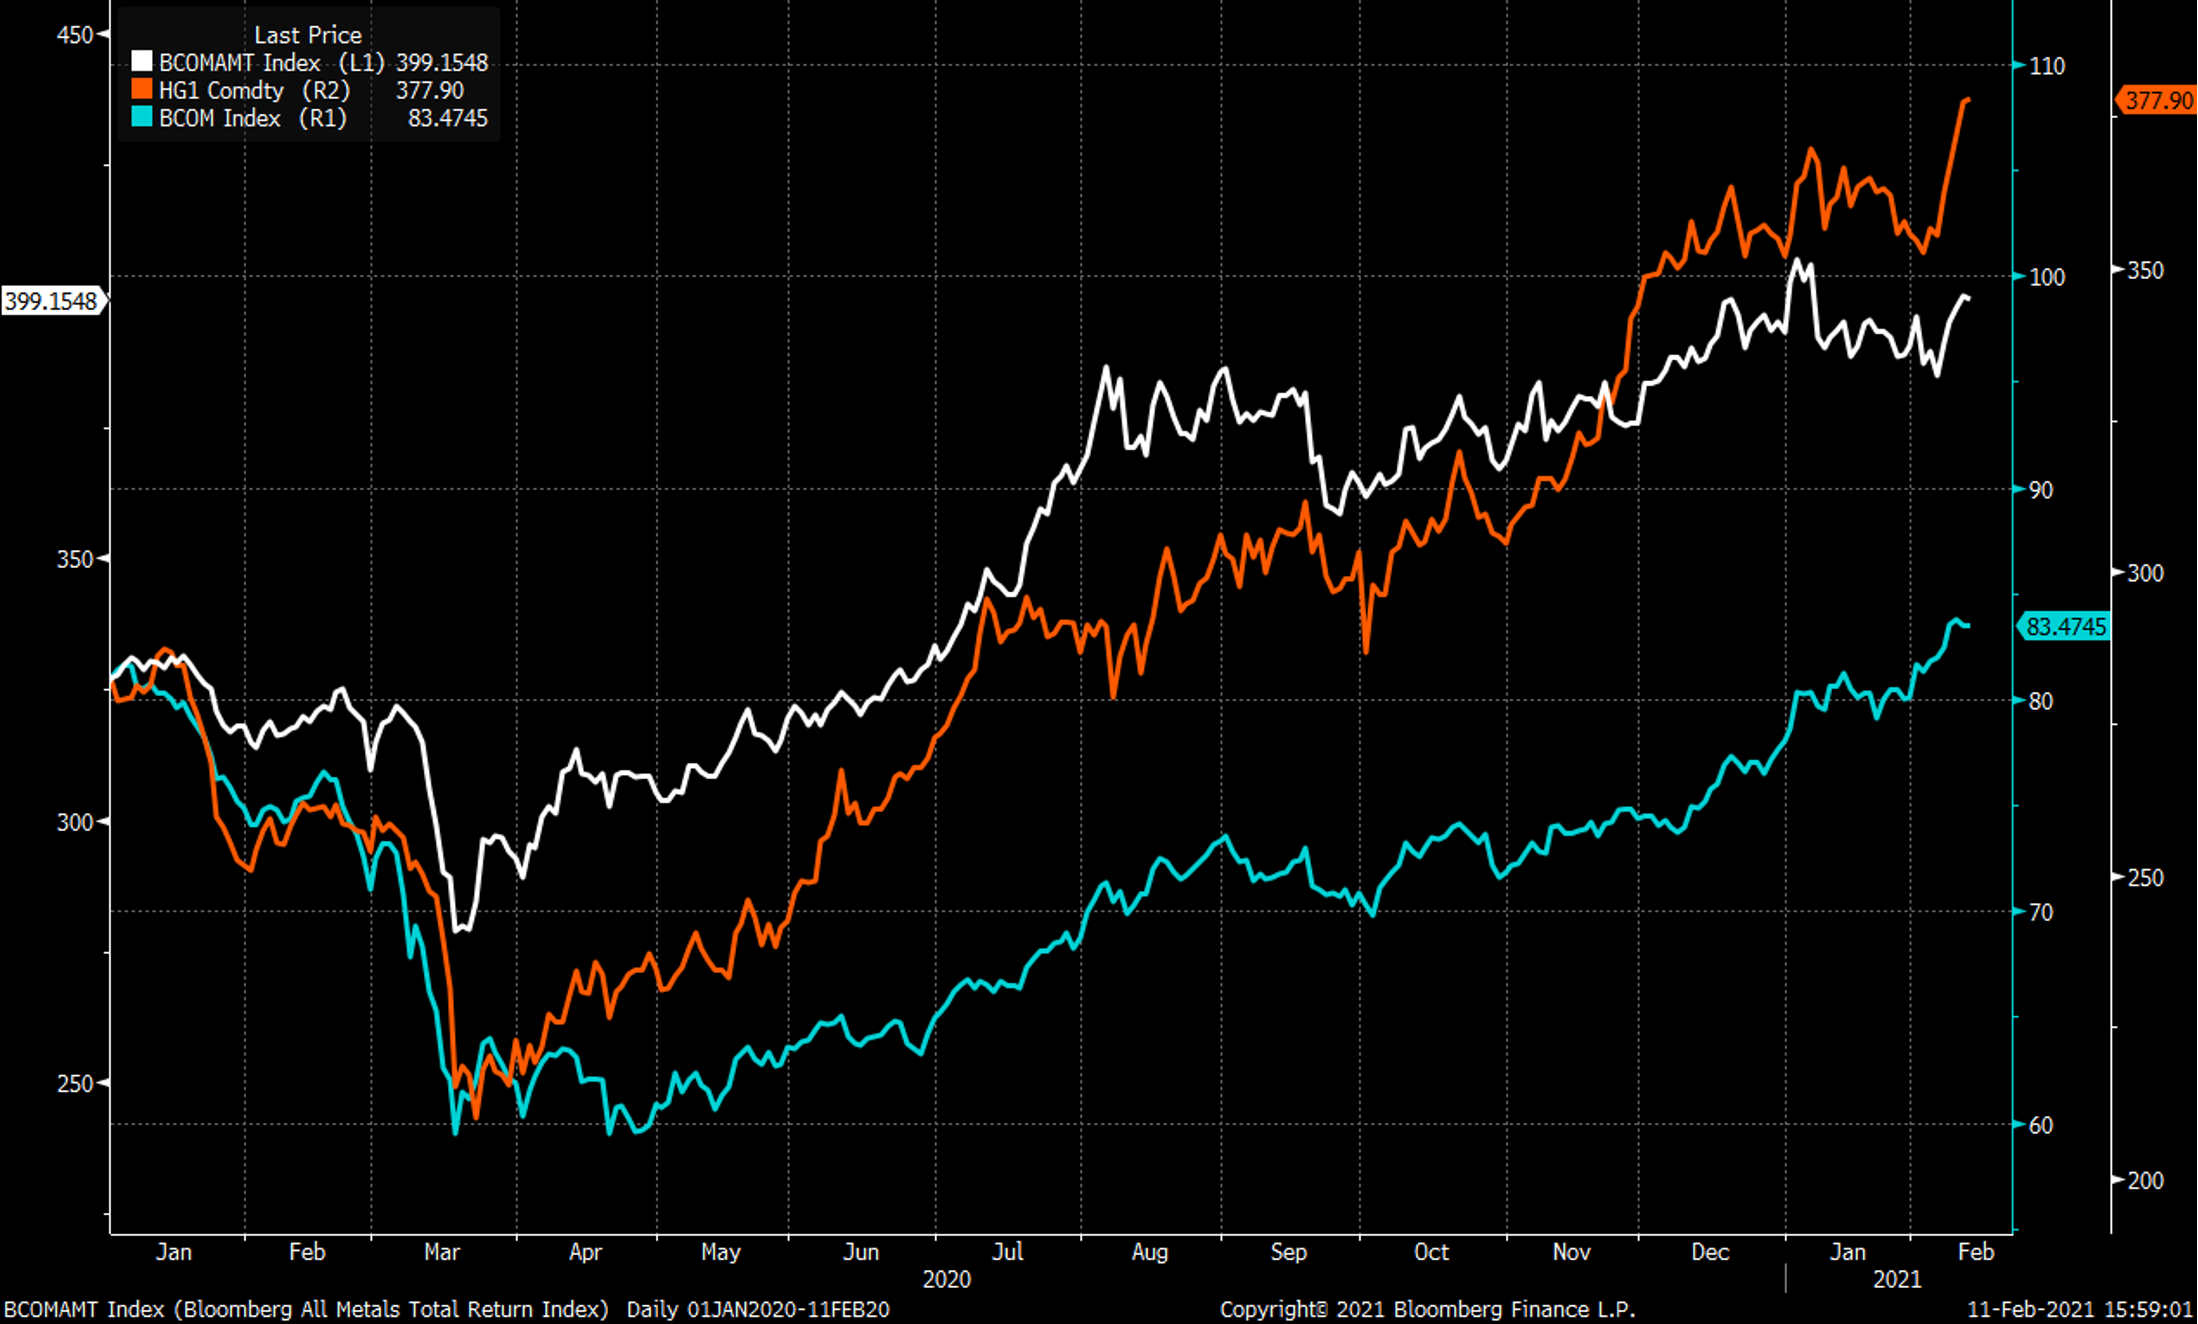 Bloomberg Metals Sub Index (BCOMAMT Index), Bloomberg Commodity Index (BCOM) and Copper Future Price